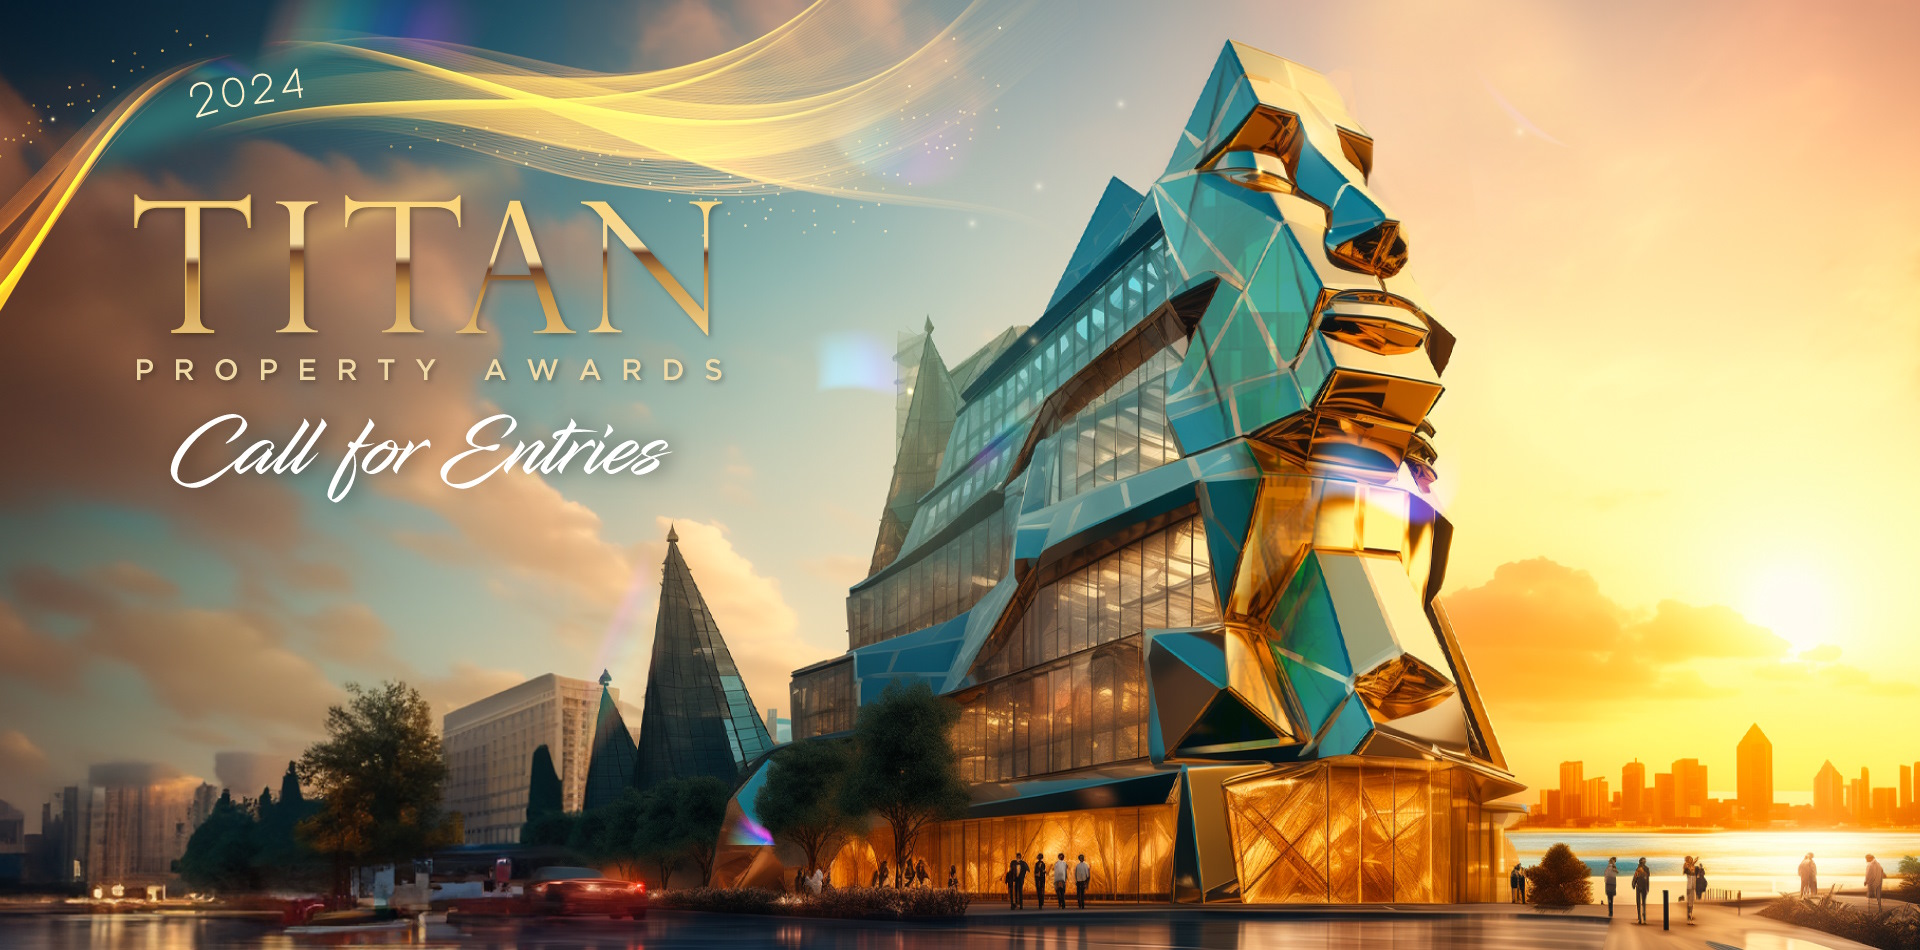 TITAN Property Awards 2024 Call For Entries